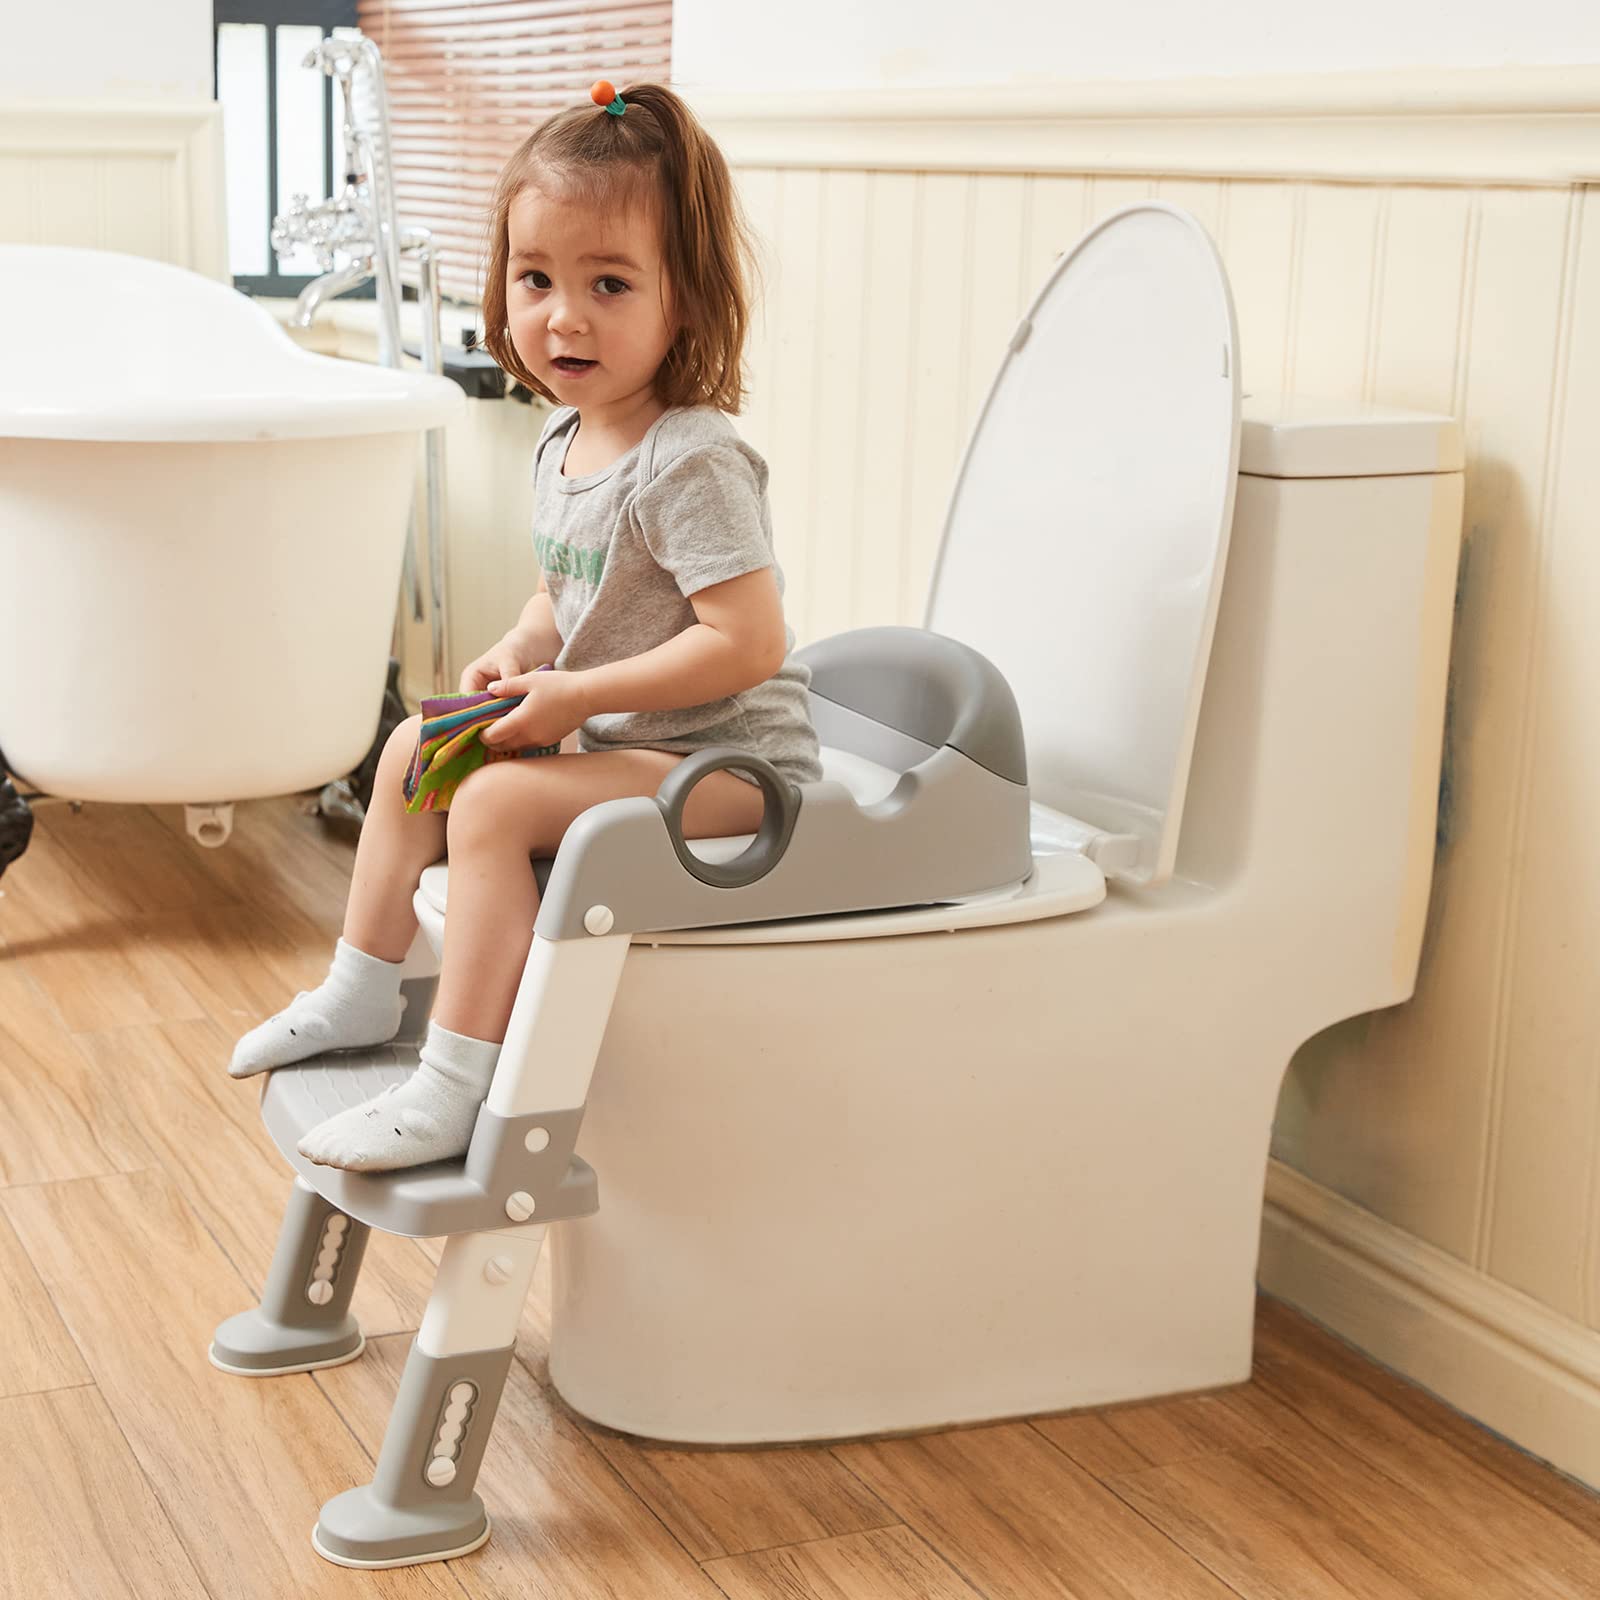 child toilet seat reviews Baby toddler toilet training potty seat